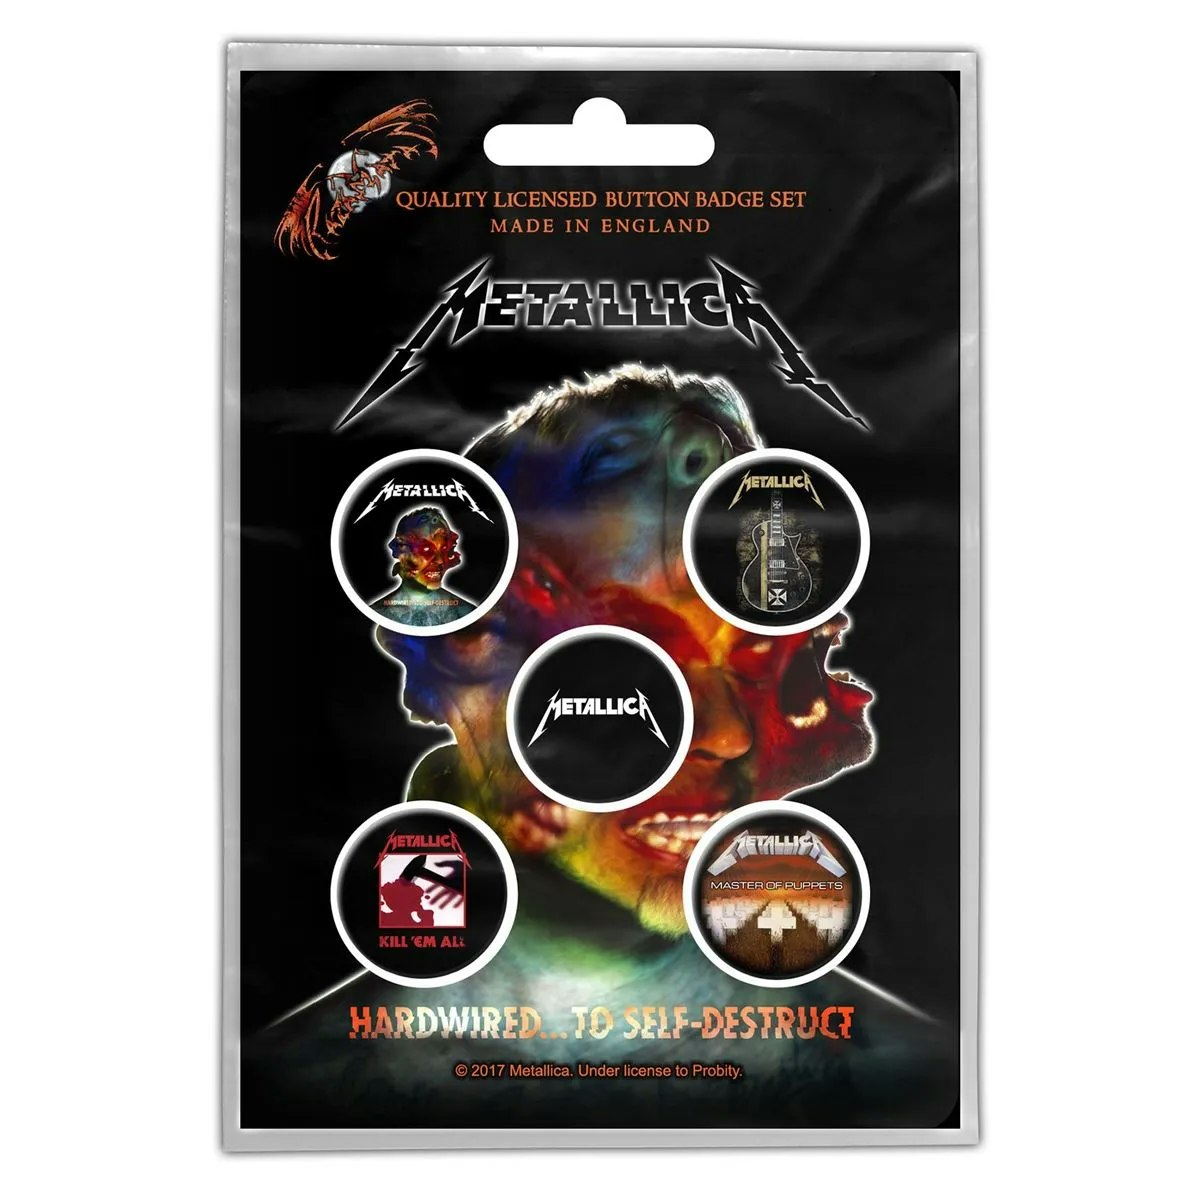 Metallica ‘Hardwired To Self Destruct’ 5-pack badge